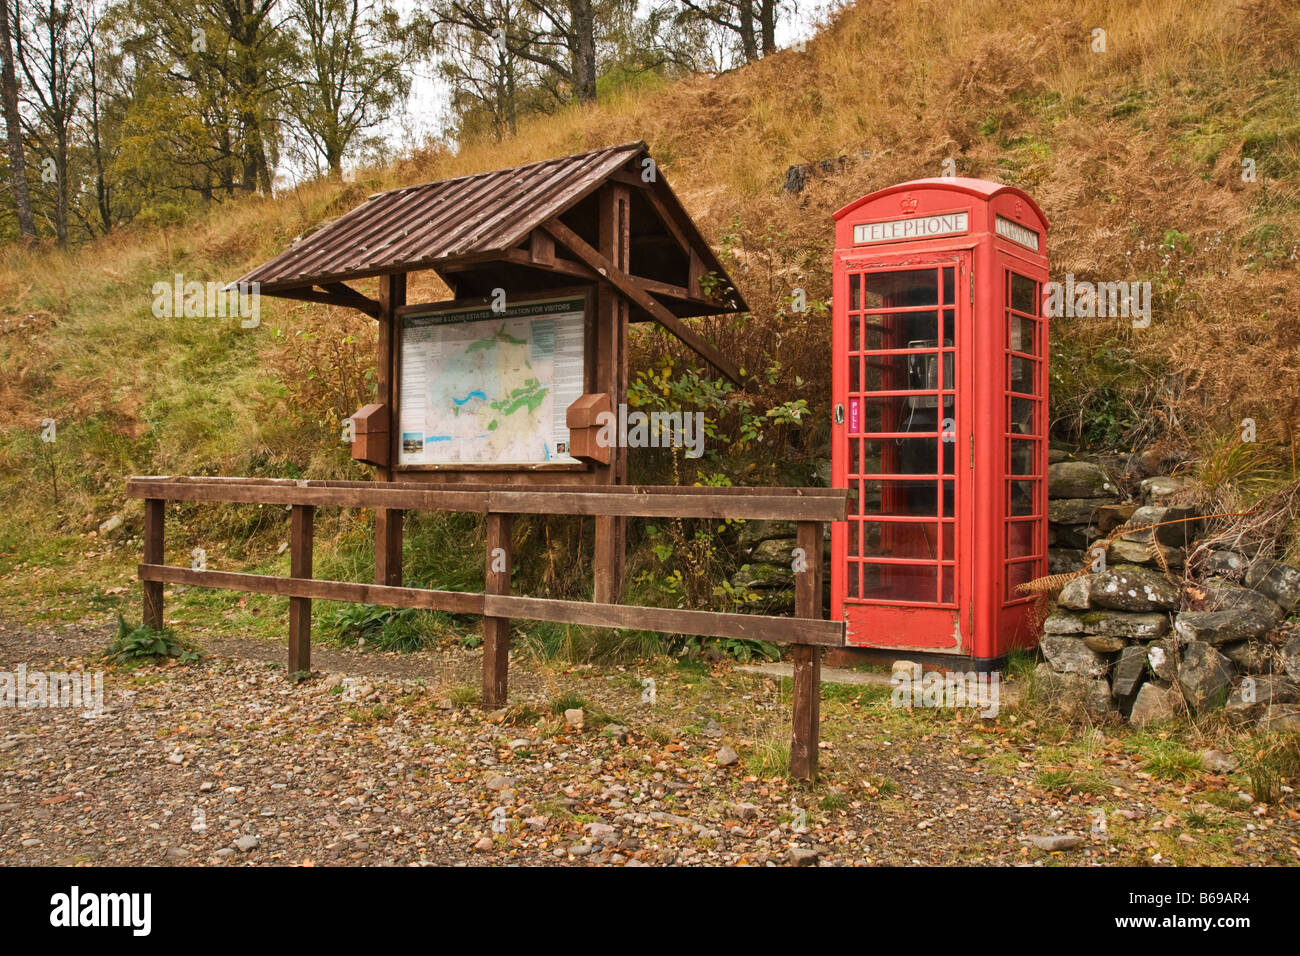 Information board and telephone box, Glen Lyon, Scotland Stock Photo